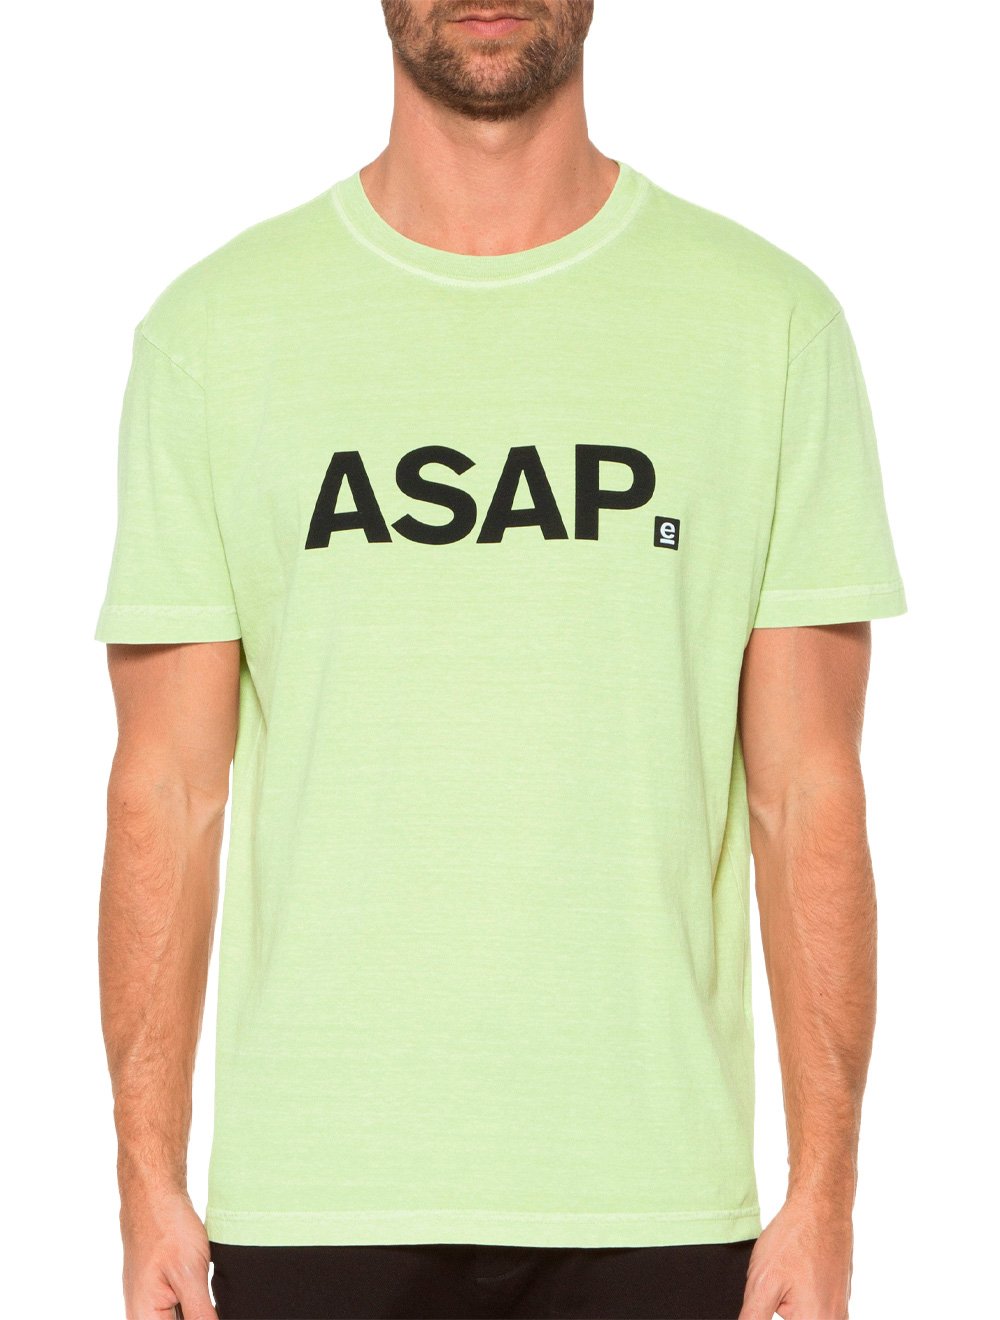 Camiseta Osklen Masculina Regular Stone Asap Eco Sash Verde Claro